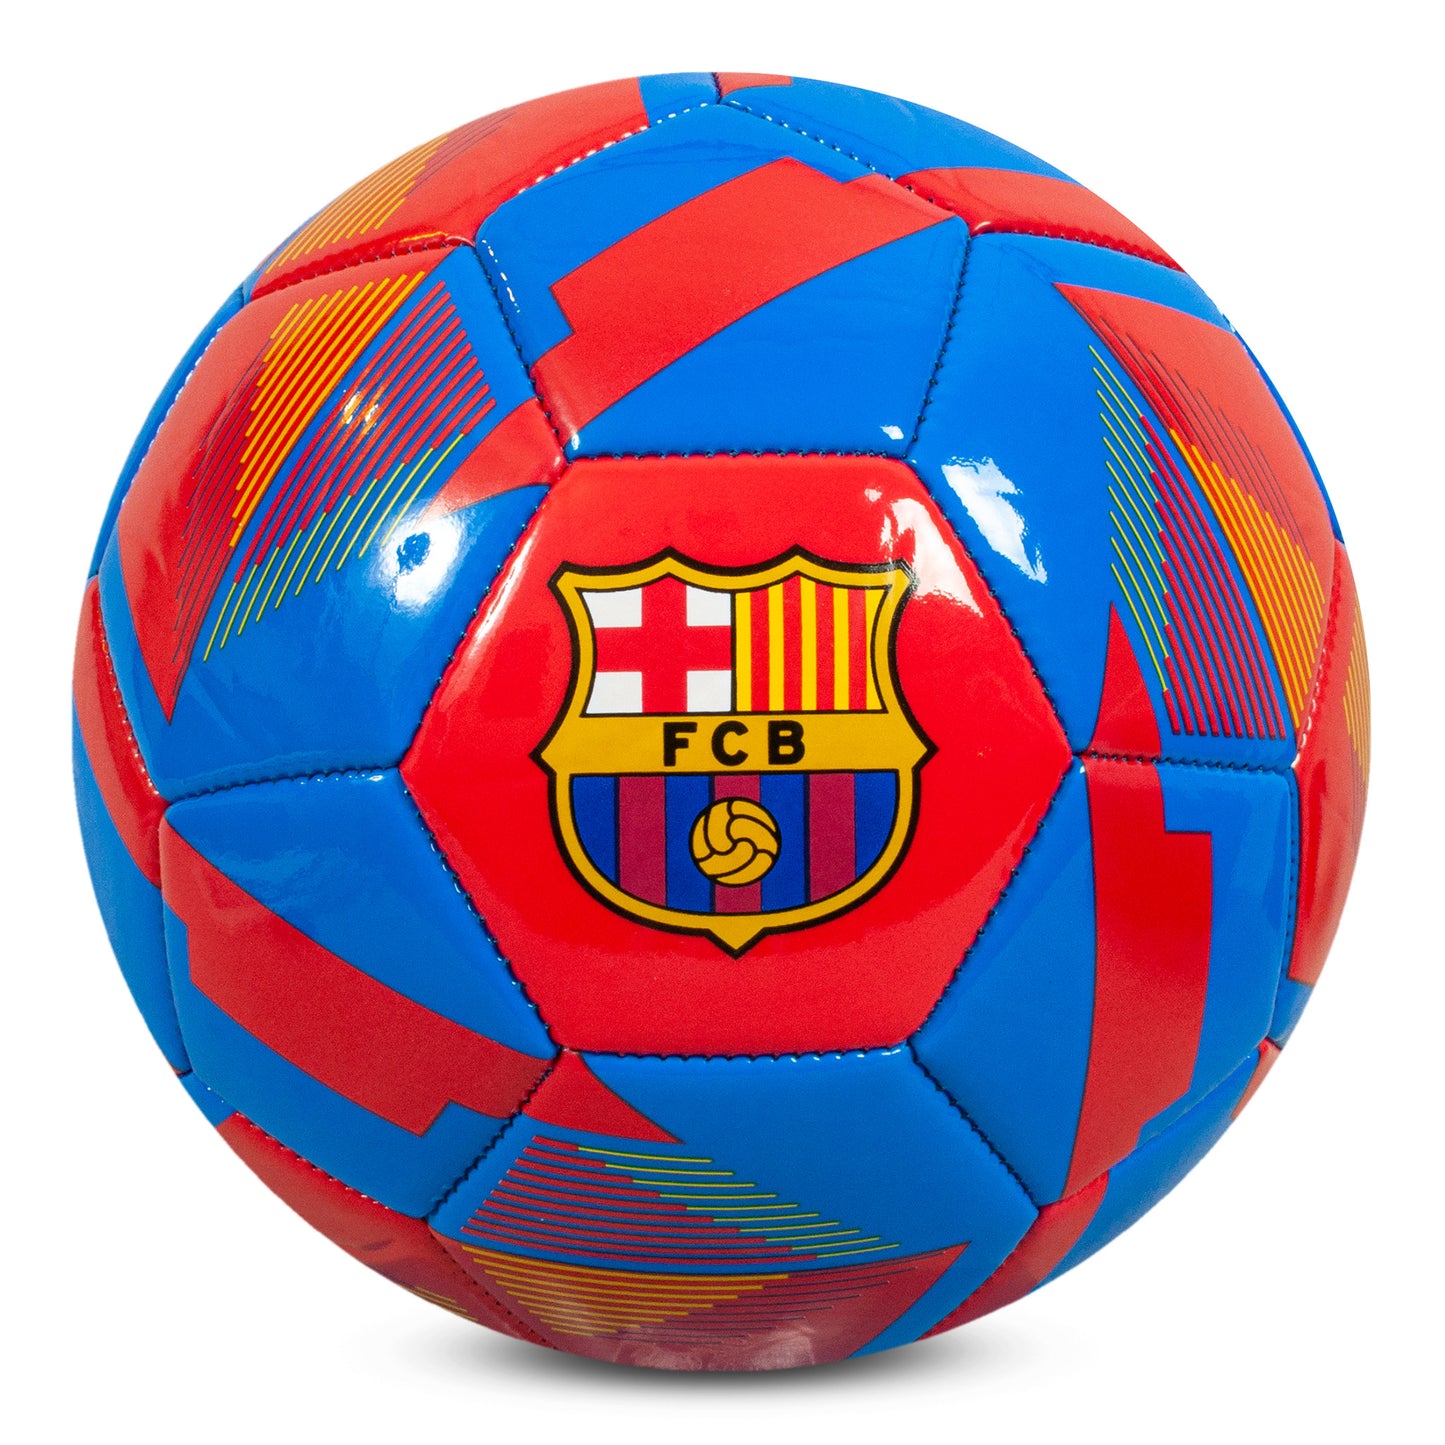 Barcelona Reflex Football